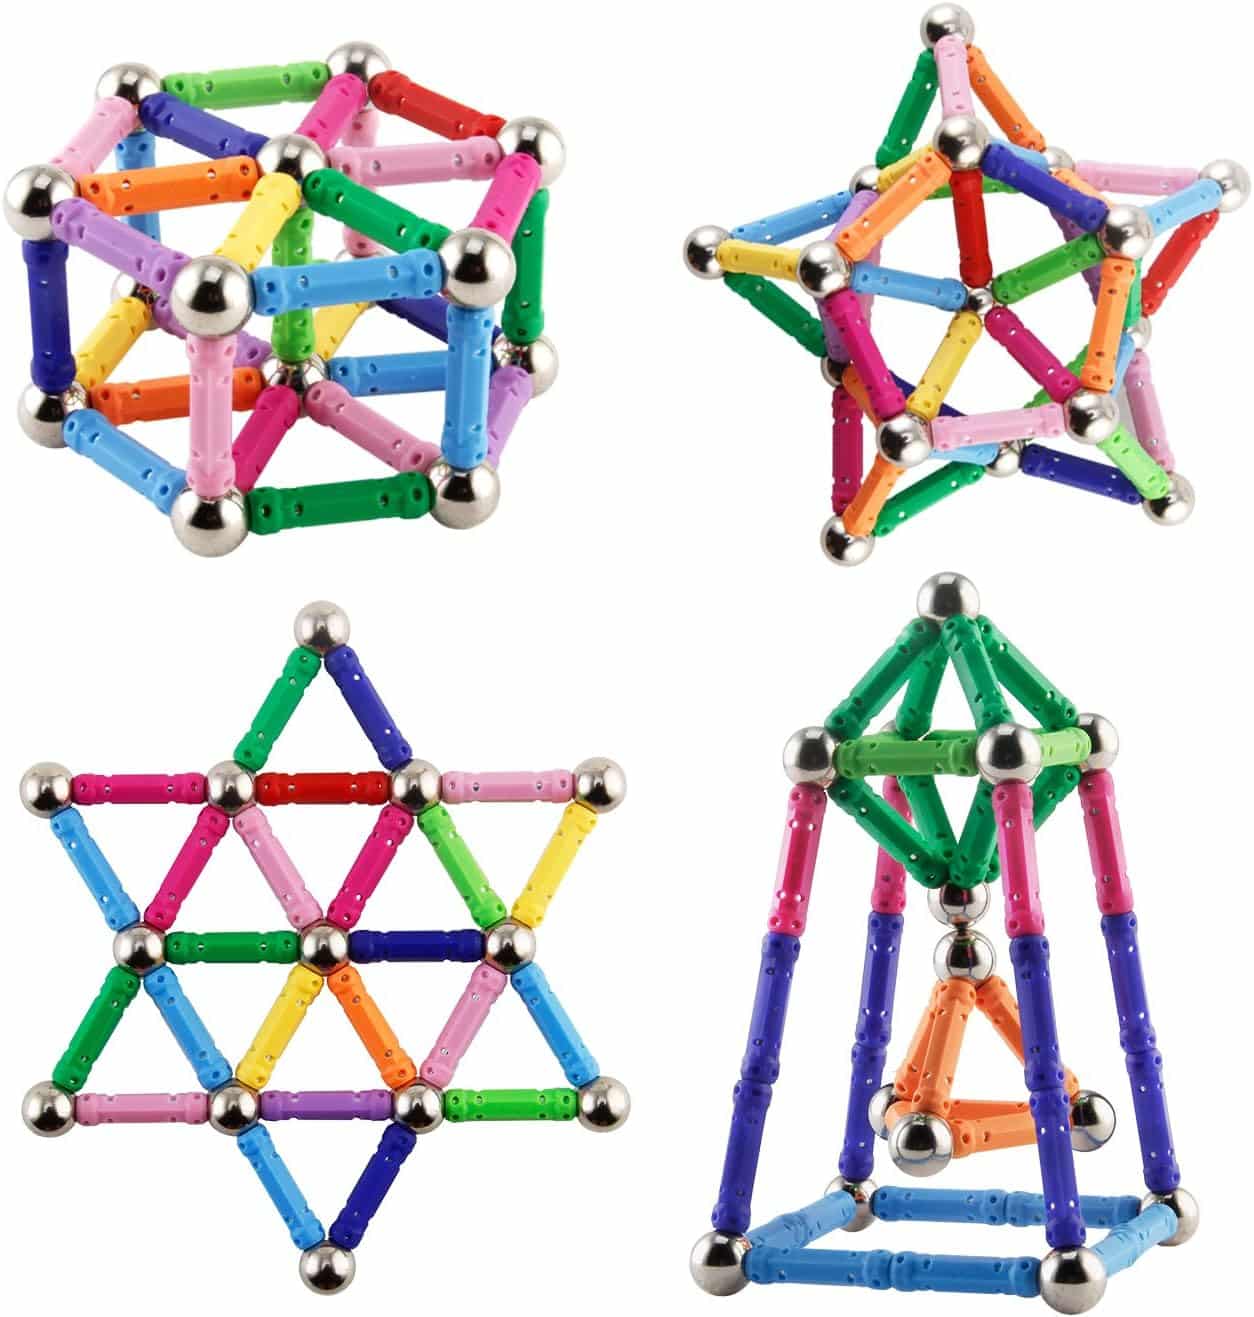 ELONGDI Magnetic Building Sticks Review: Unlock Your Child's Creativity